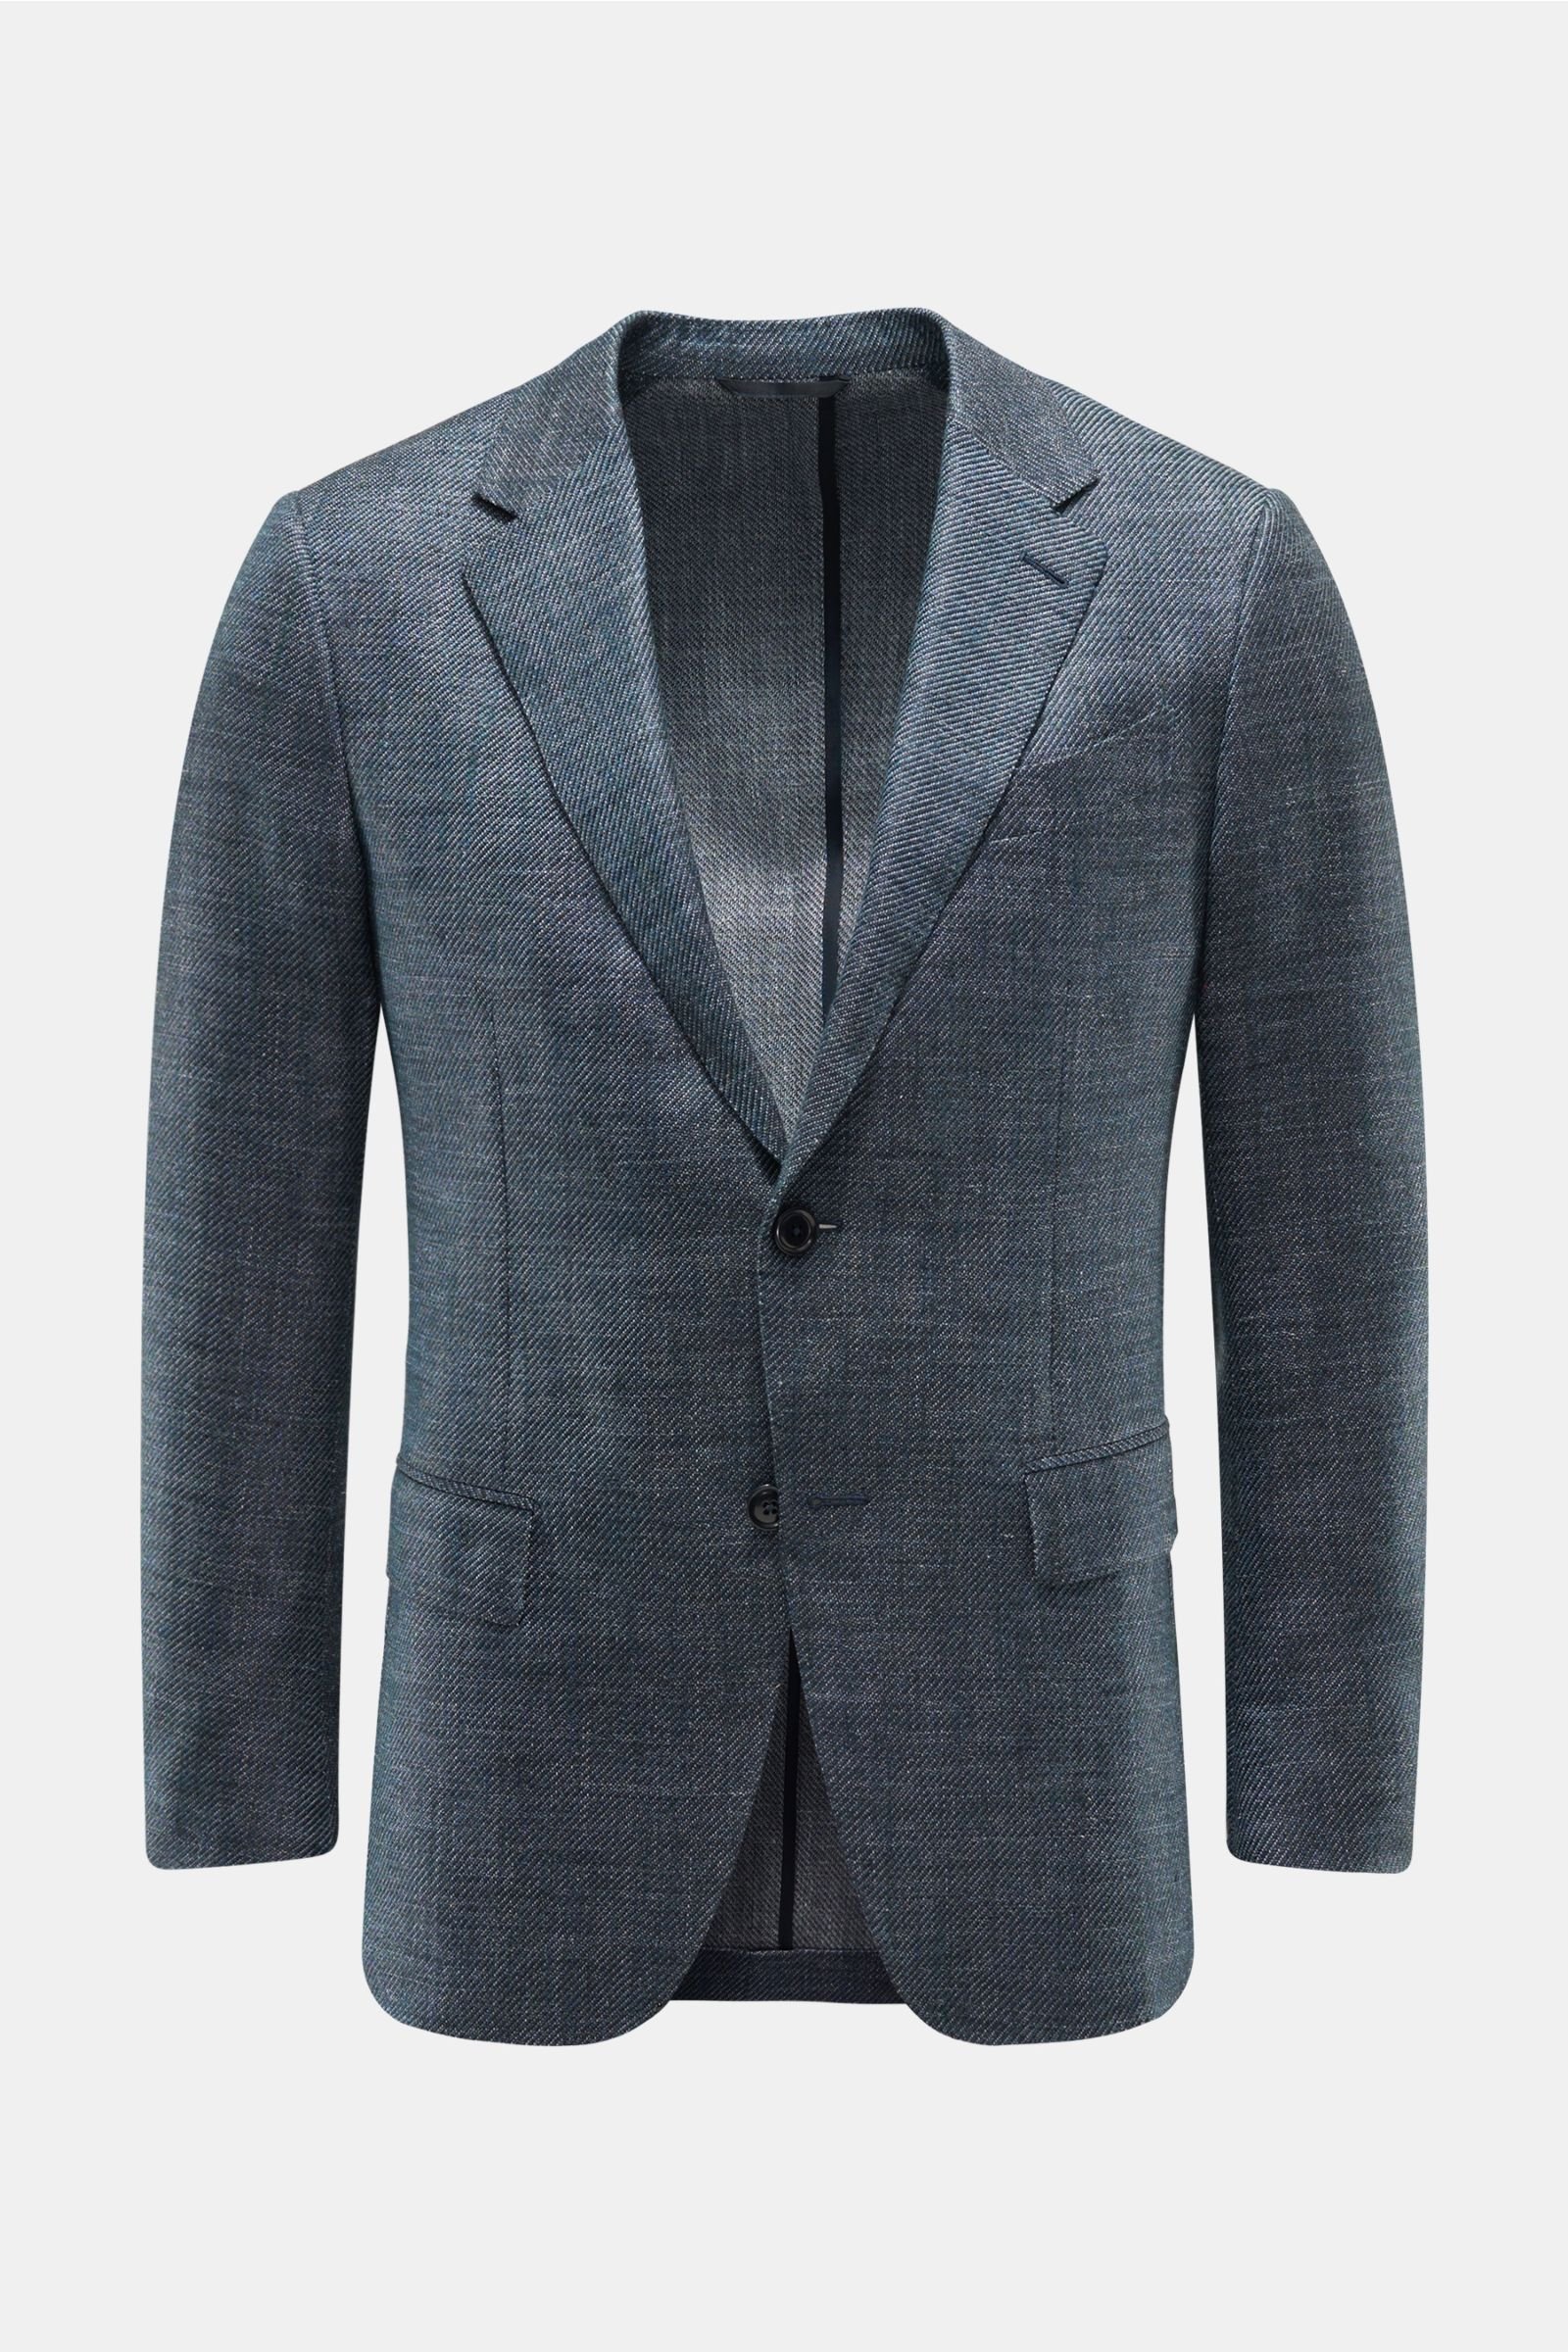 Smart-casual jacket 'Zero Weight' grey-blue